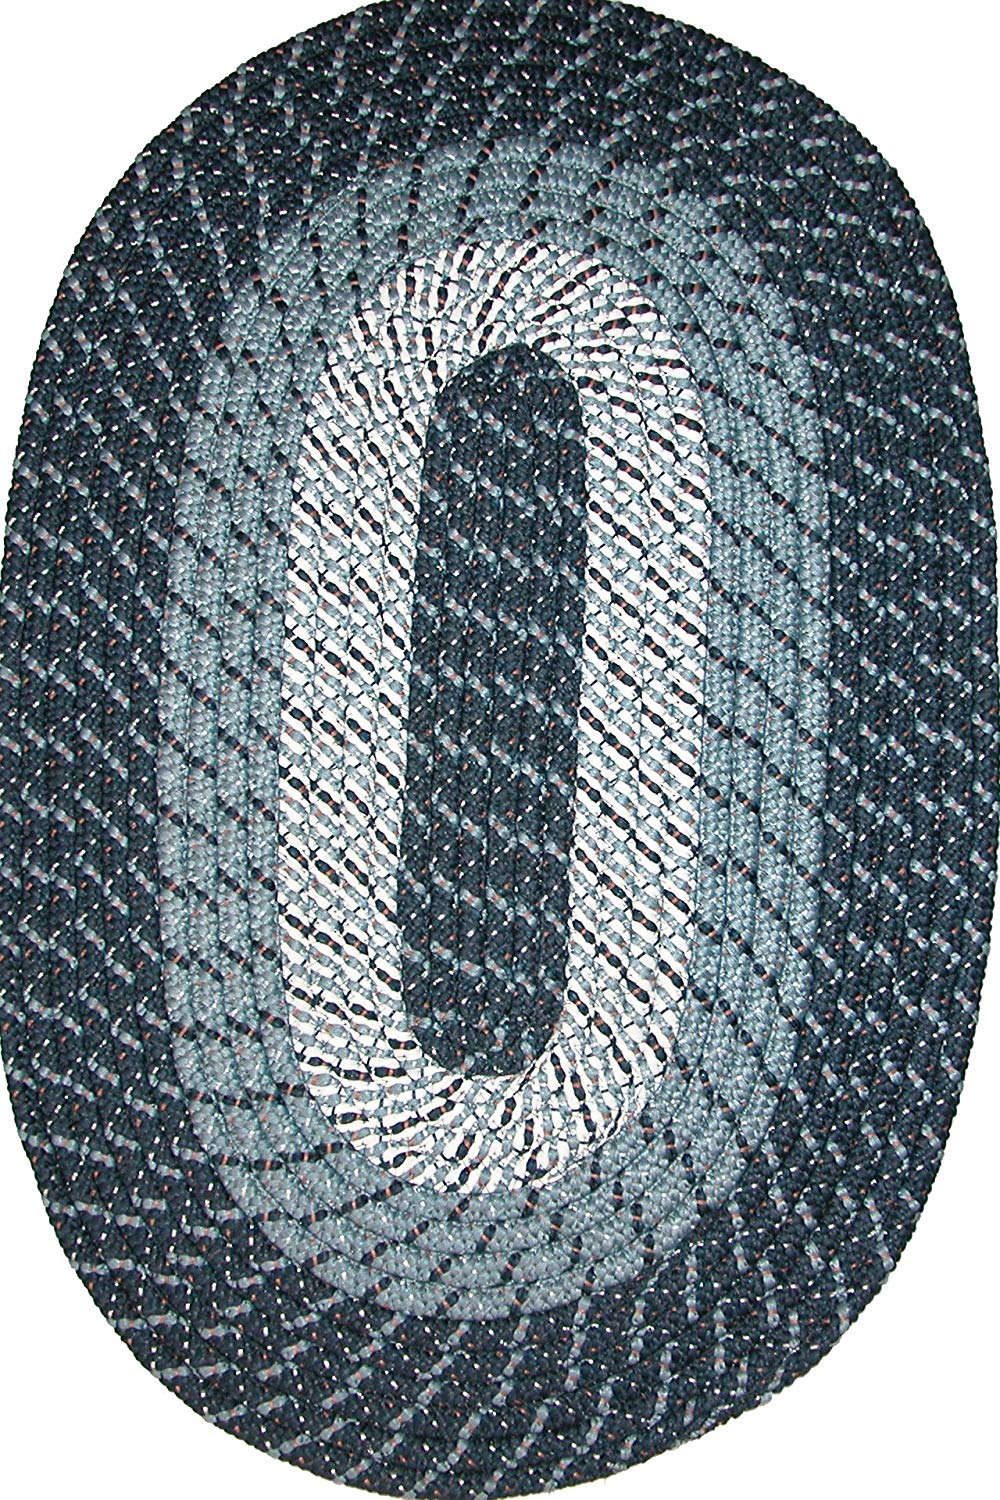 braided rugs amazon.com: plymouth 5u0027 x 8u0027 braided rug in midnight blue: kitchen u0026 dining EDRGEDX